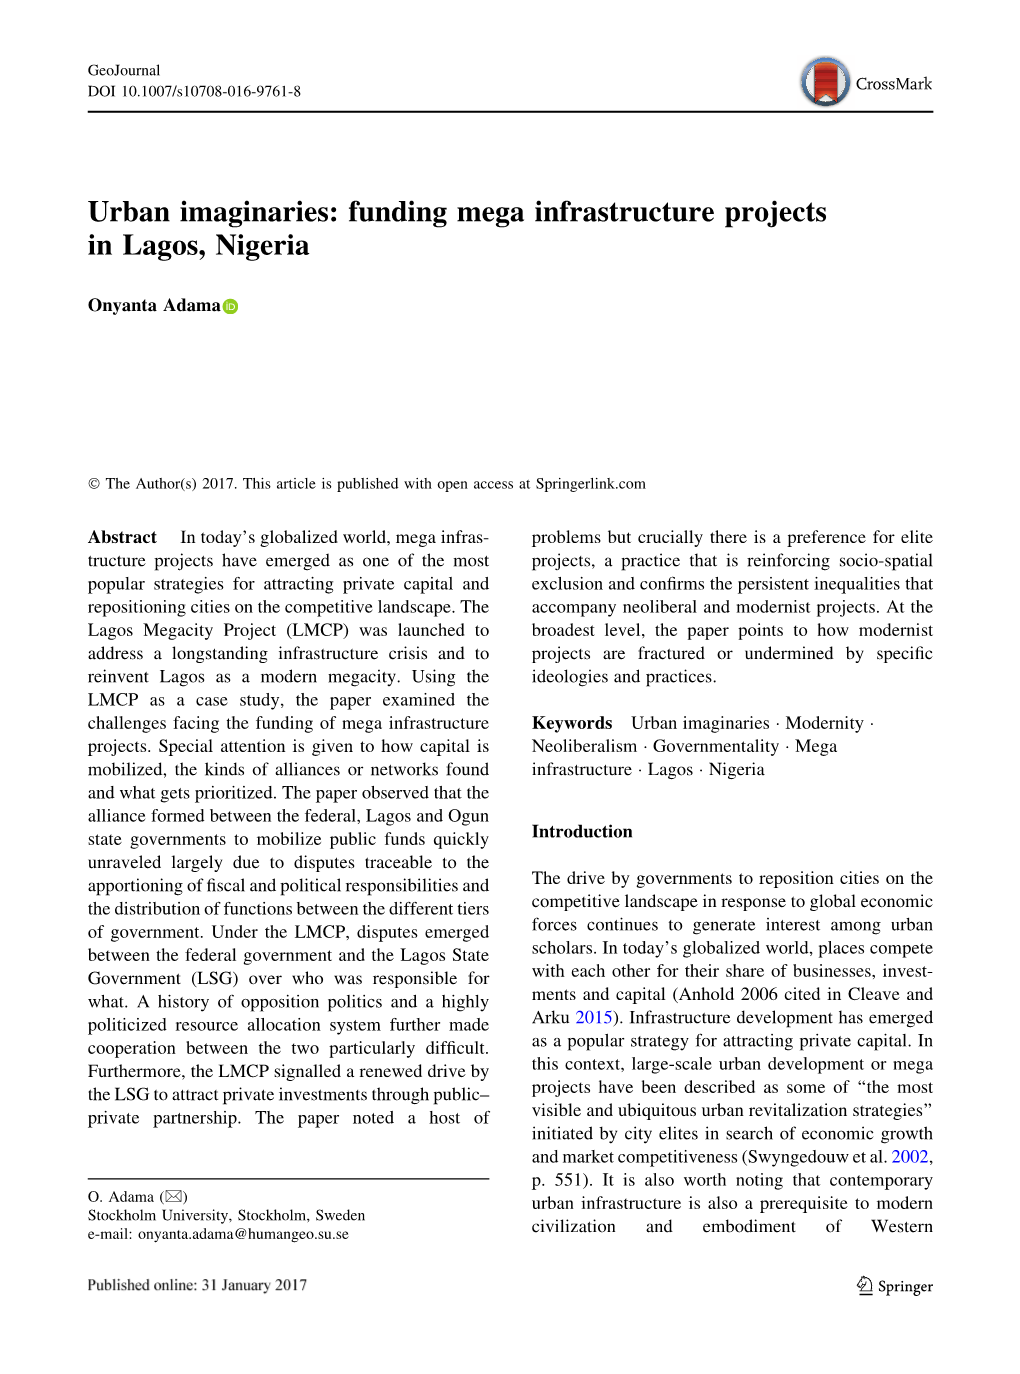 Urban Imaginaries: Funding Mega Infrastructure Projects in Lagos, Nigeria